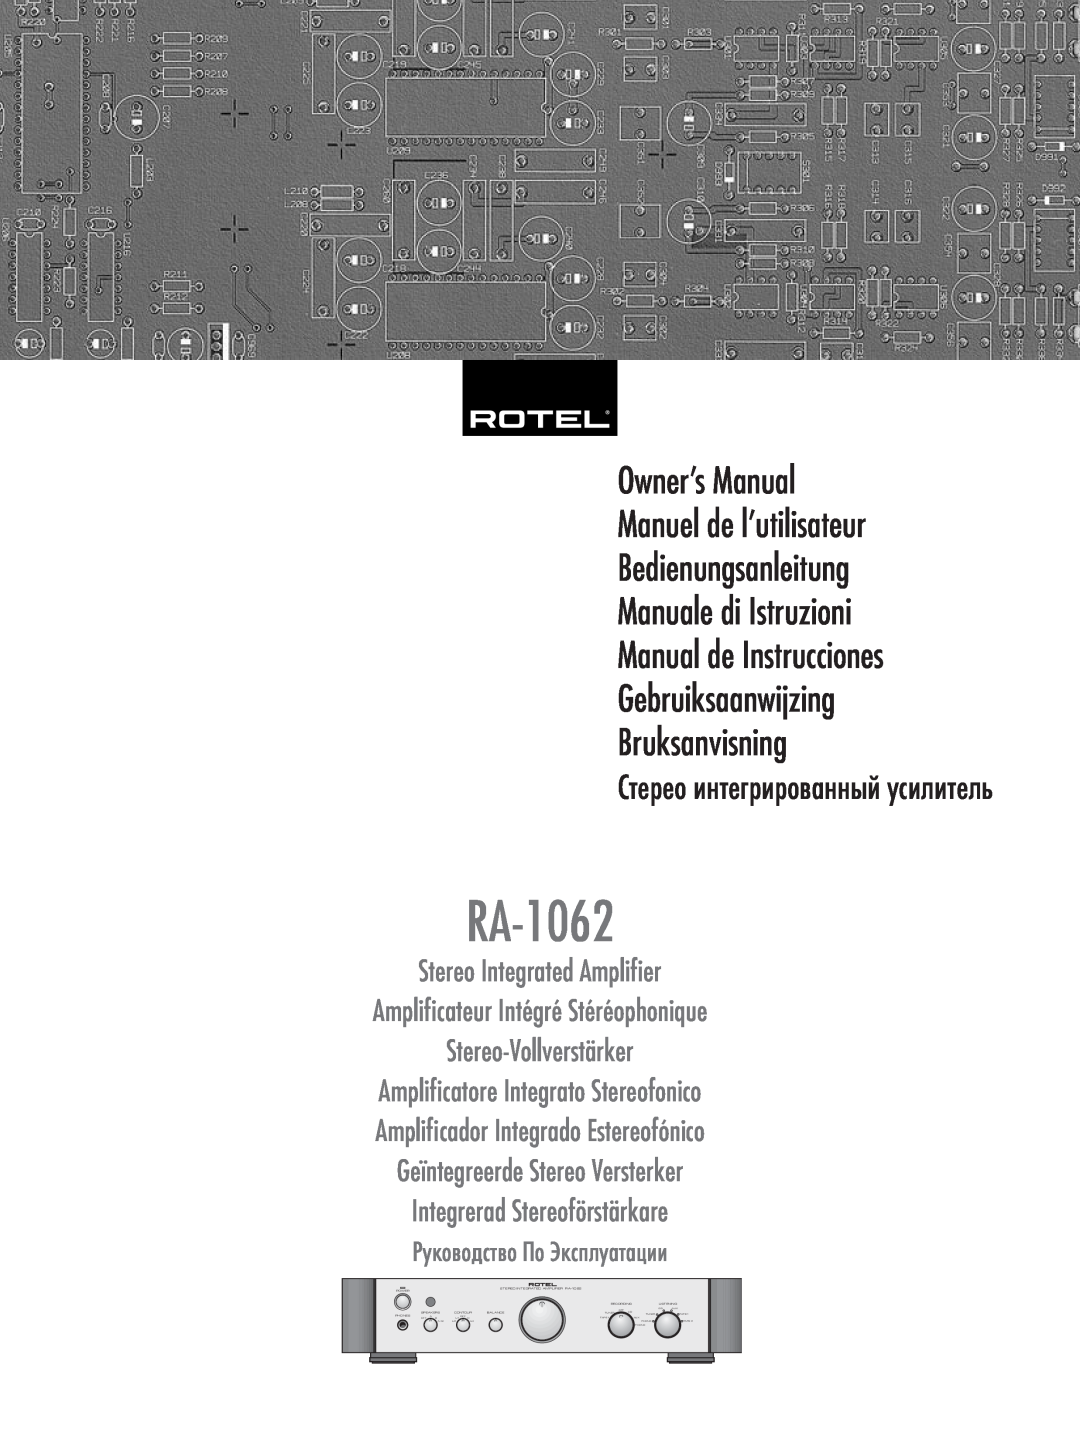 Rotel RA-1062 owner manual Bedienungsanleitung Manuale di Istruzioni, Manual de Instrucciones Gebruiksaanwijzing 